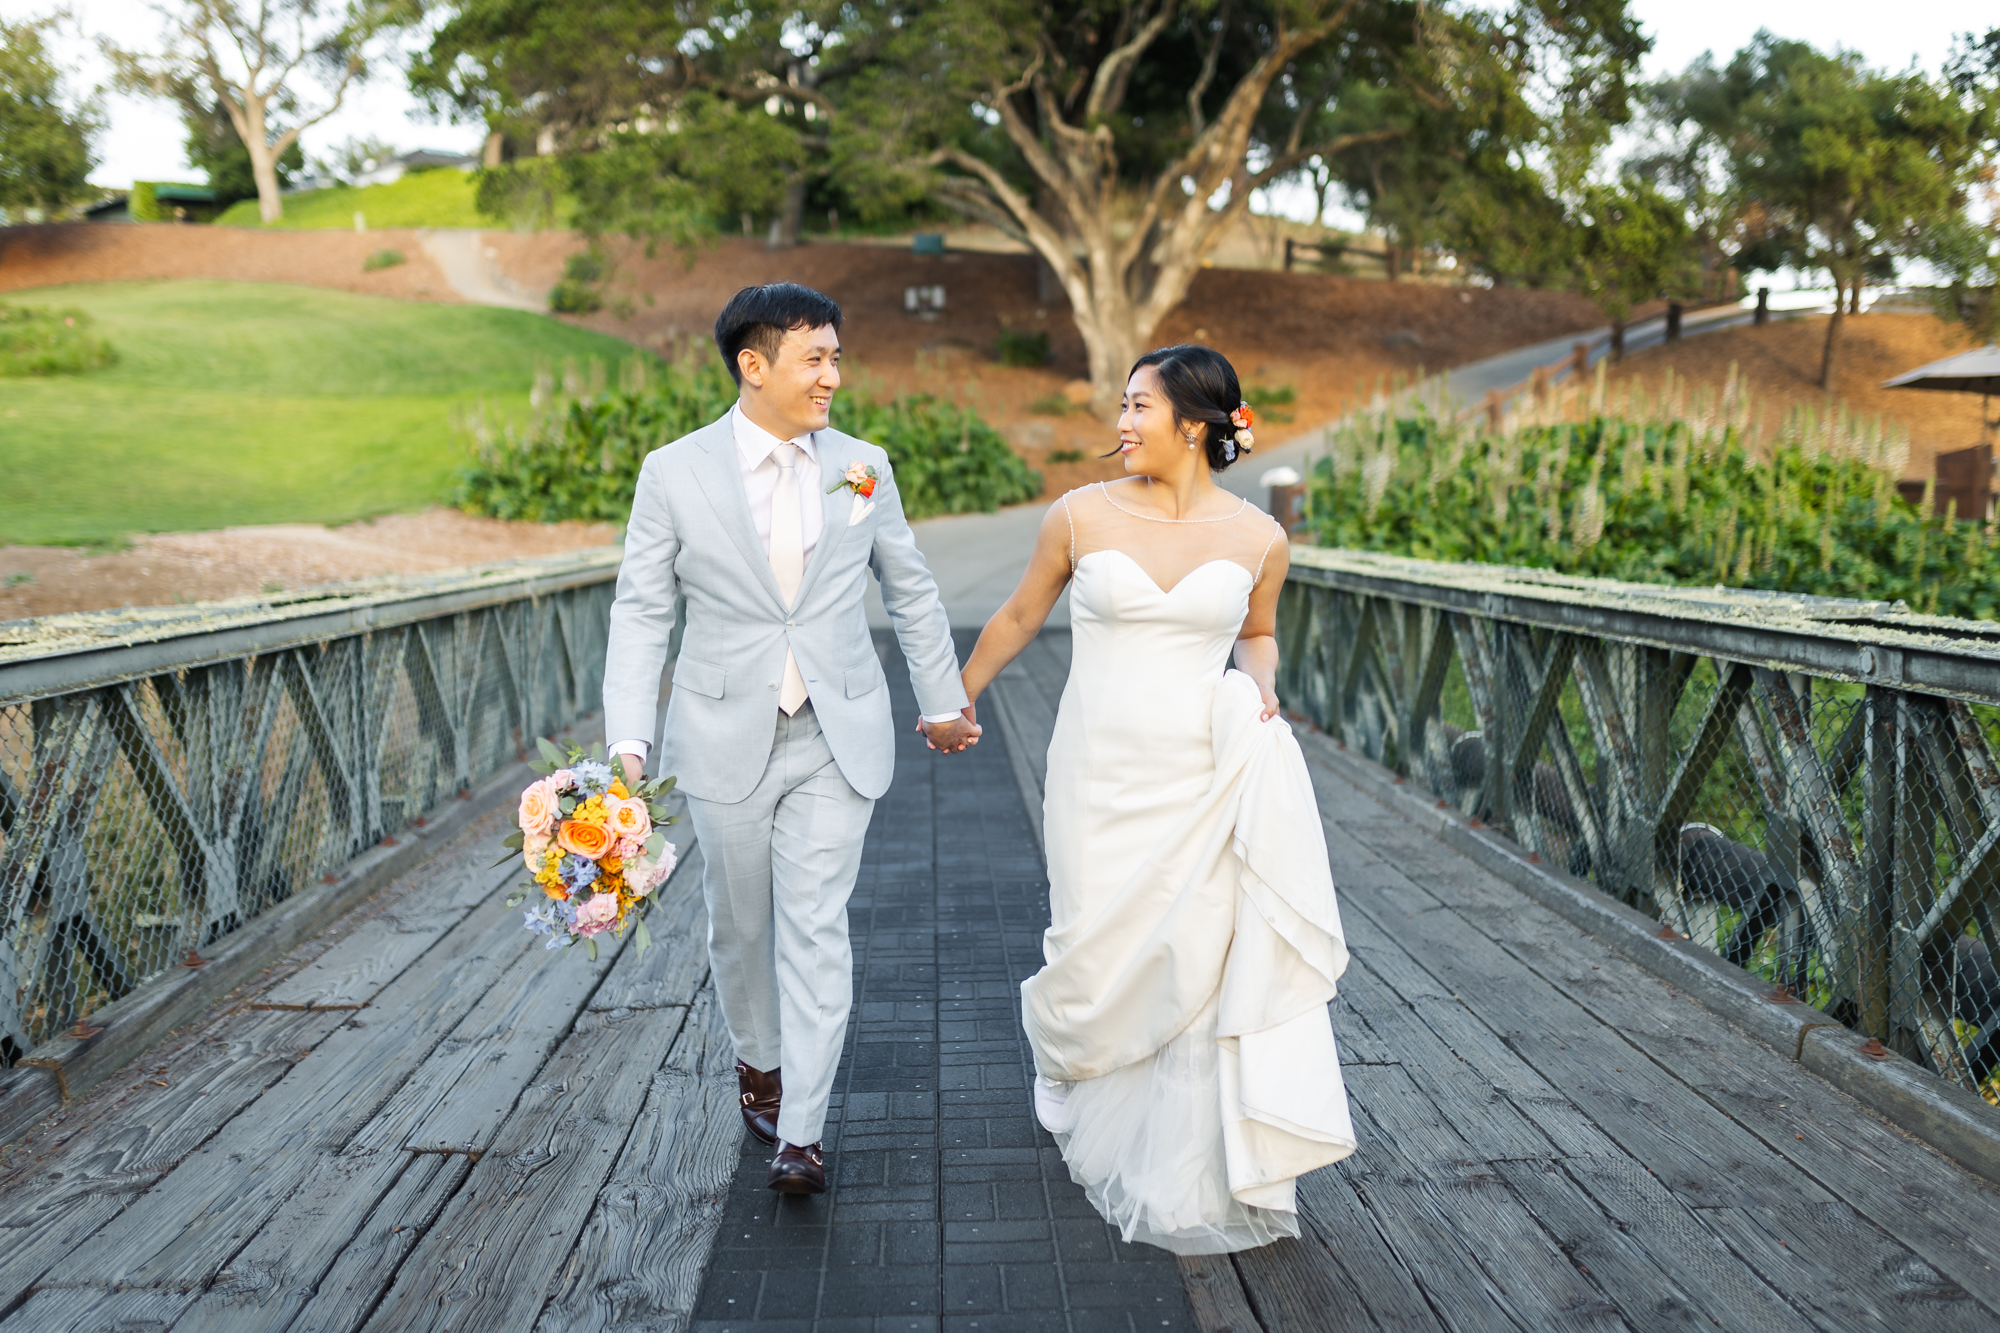 Michael & Ya-Ting’s Wedding at The Hollins House Wedding Photography Blog